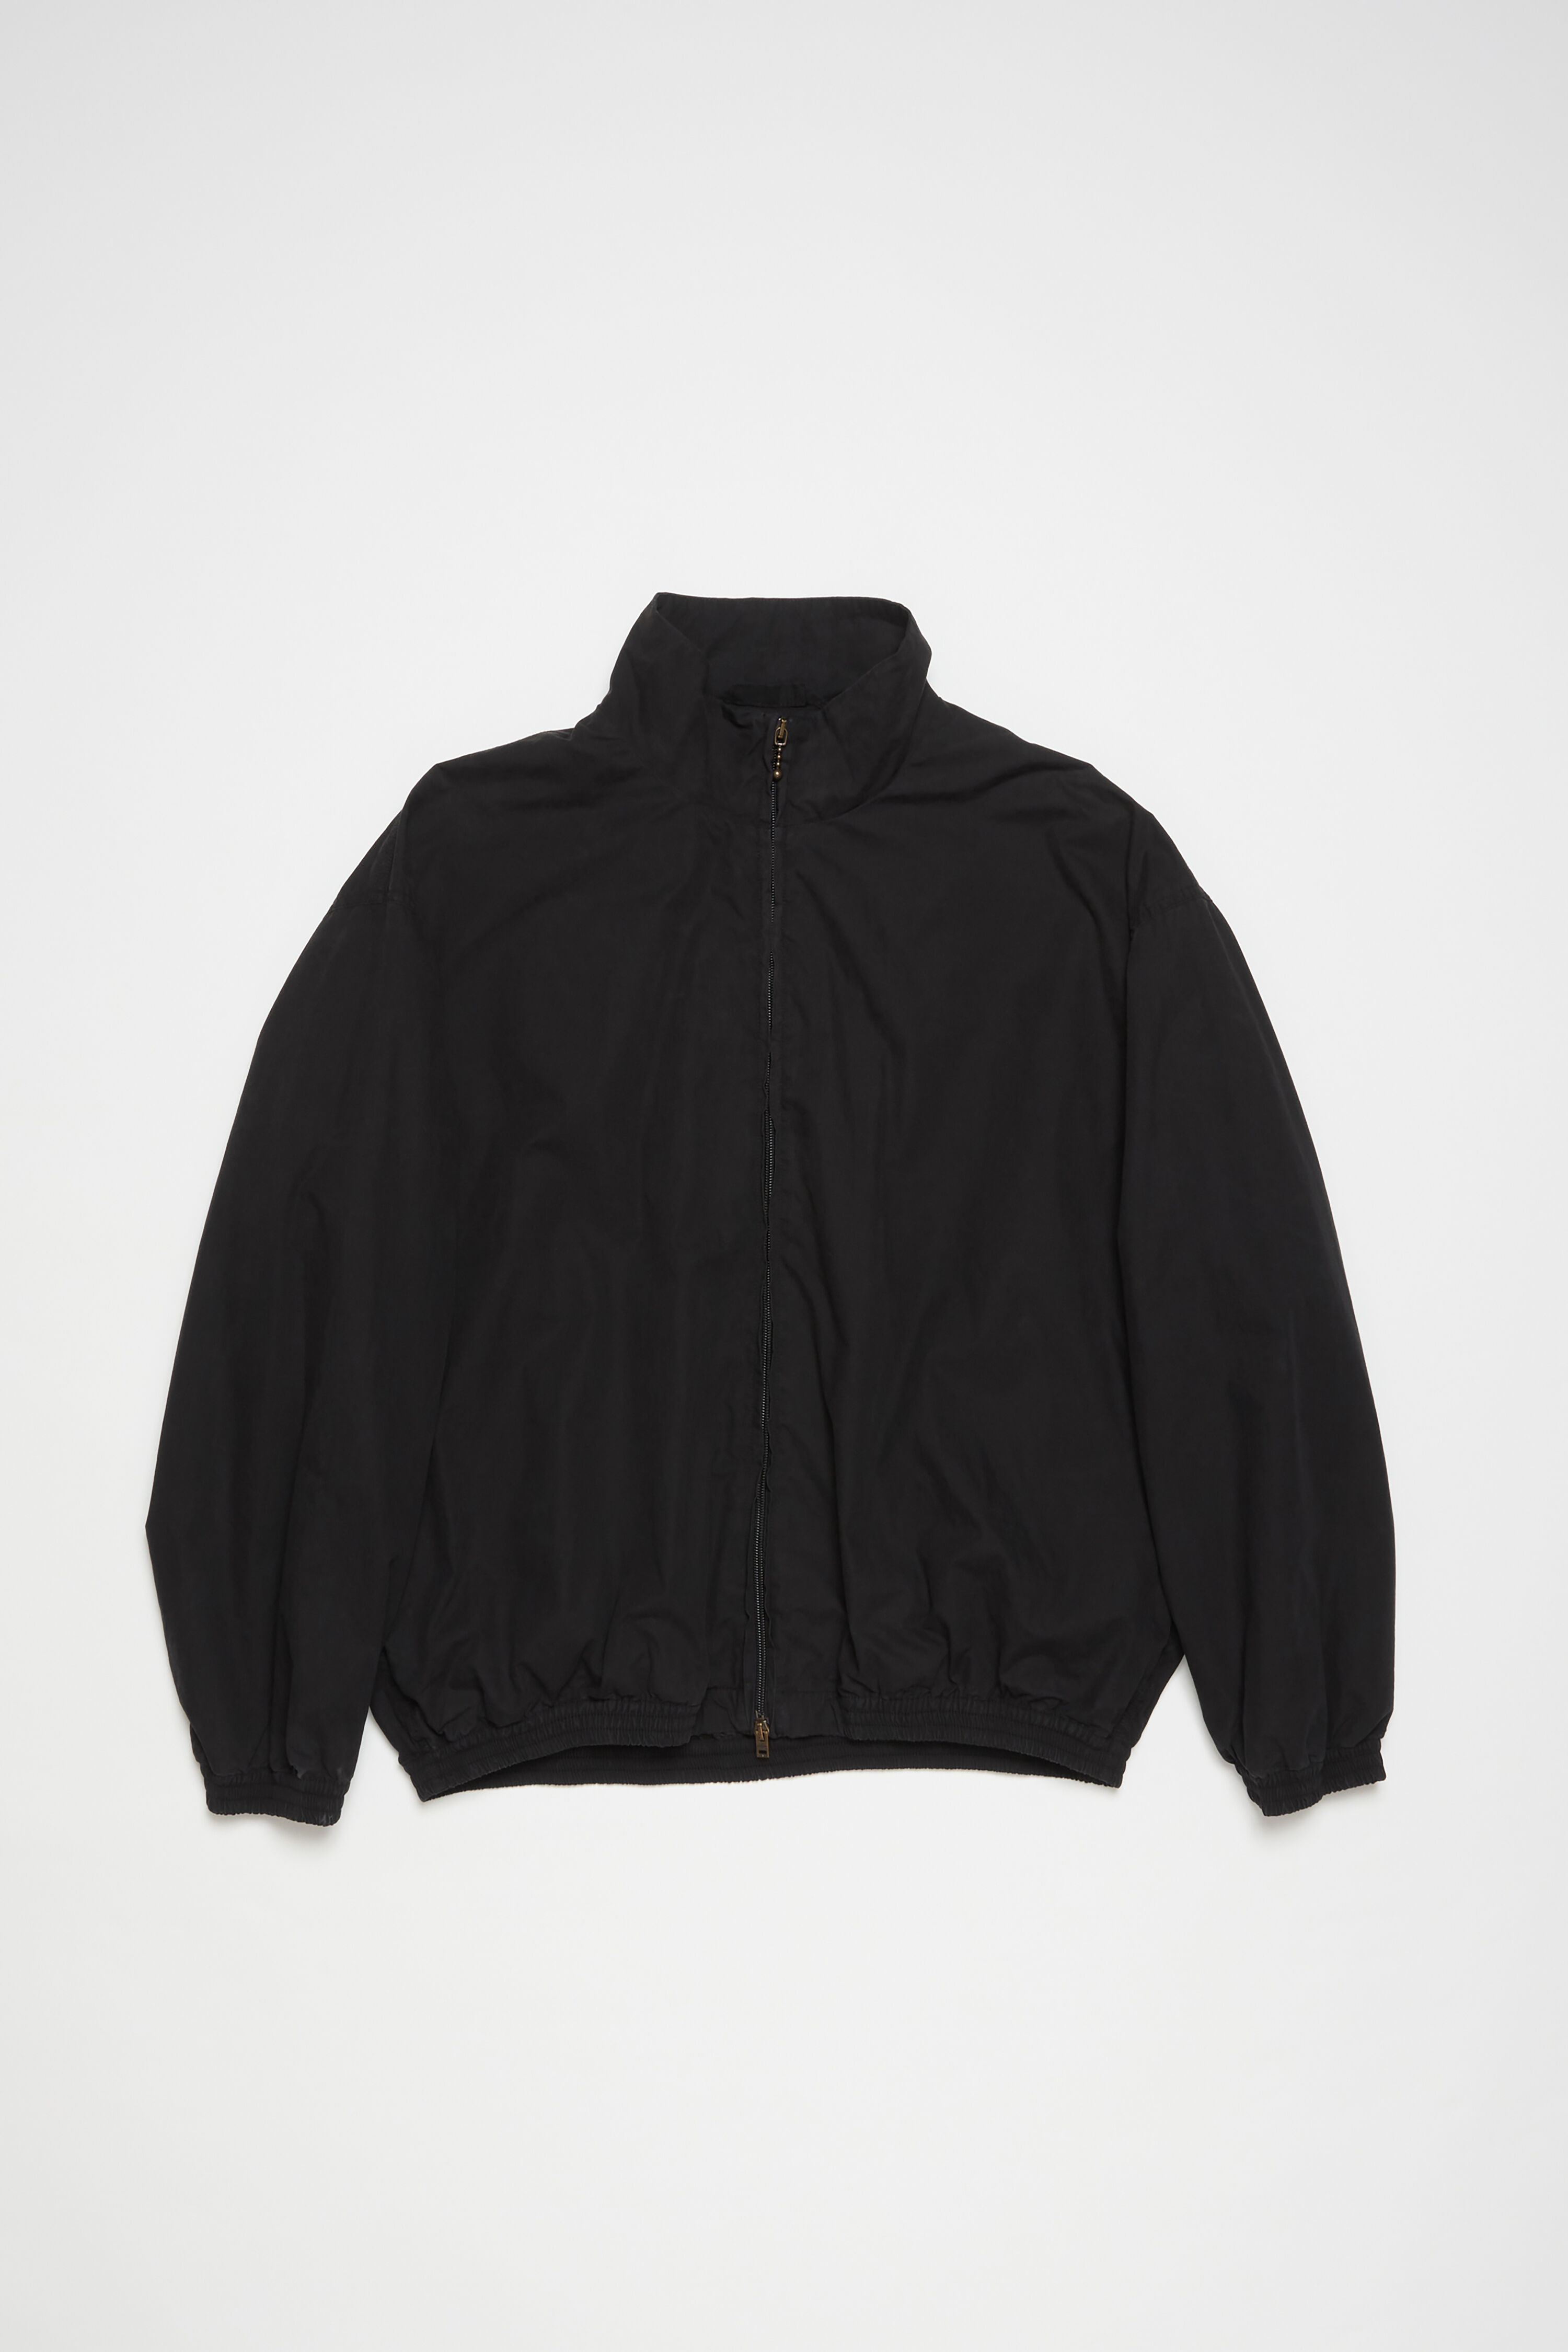 Acne Studios - Logo zipper jacket - Black